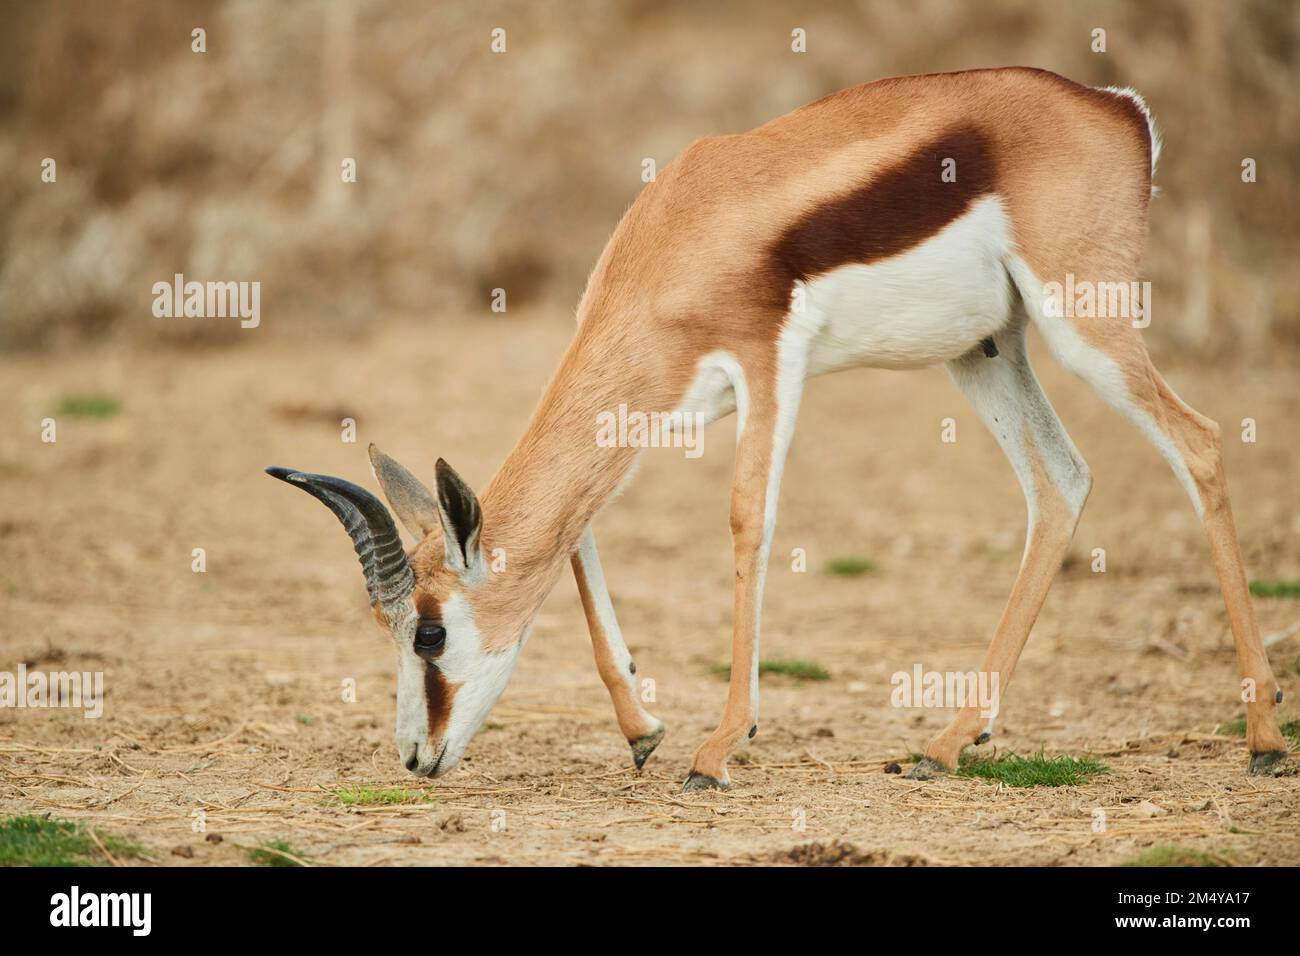 Springbok (Antidorcas marsupialis) im Dessert, in Gefangenschaft, Vertriebsafrika Stockfoto